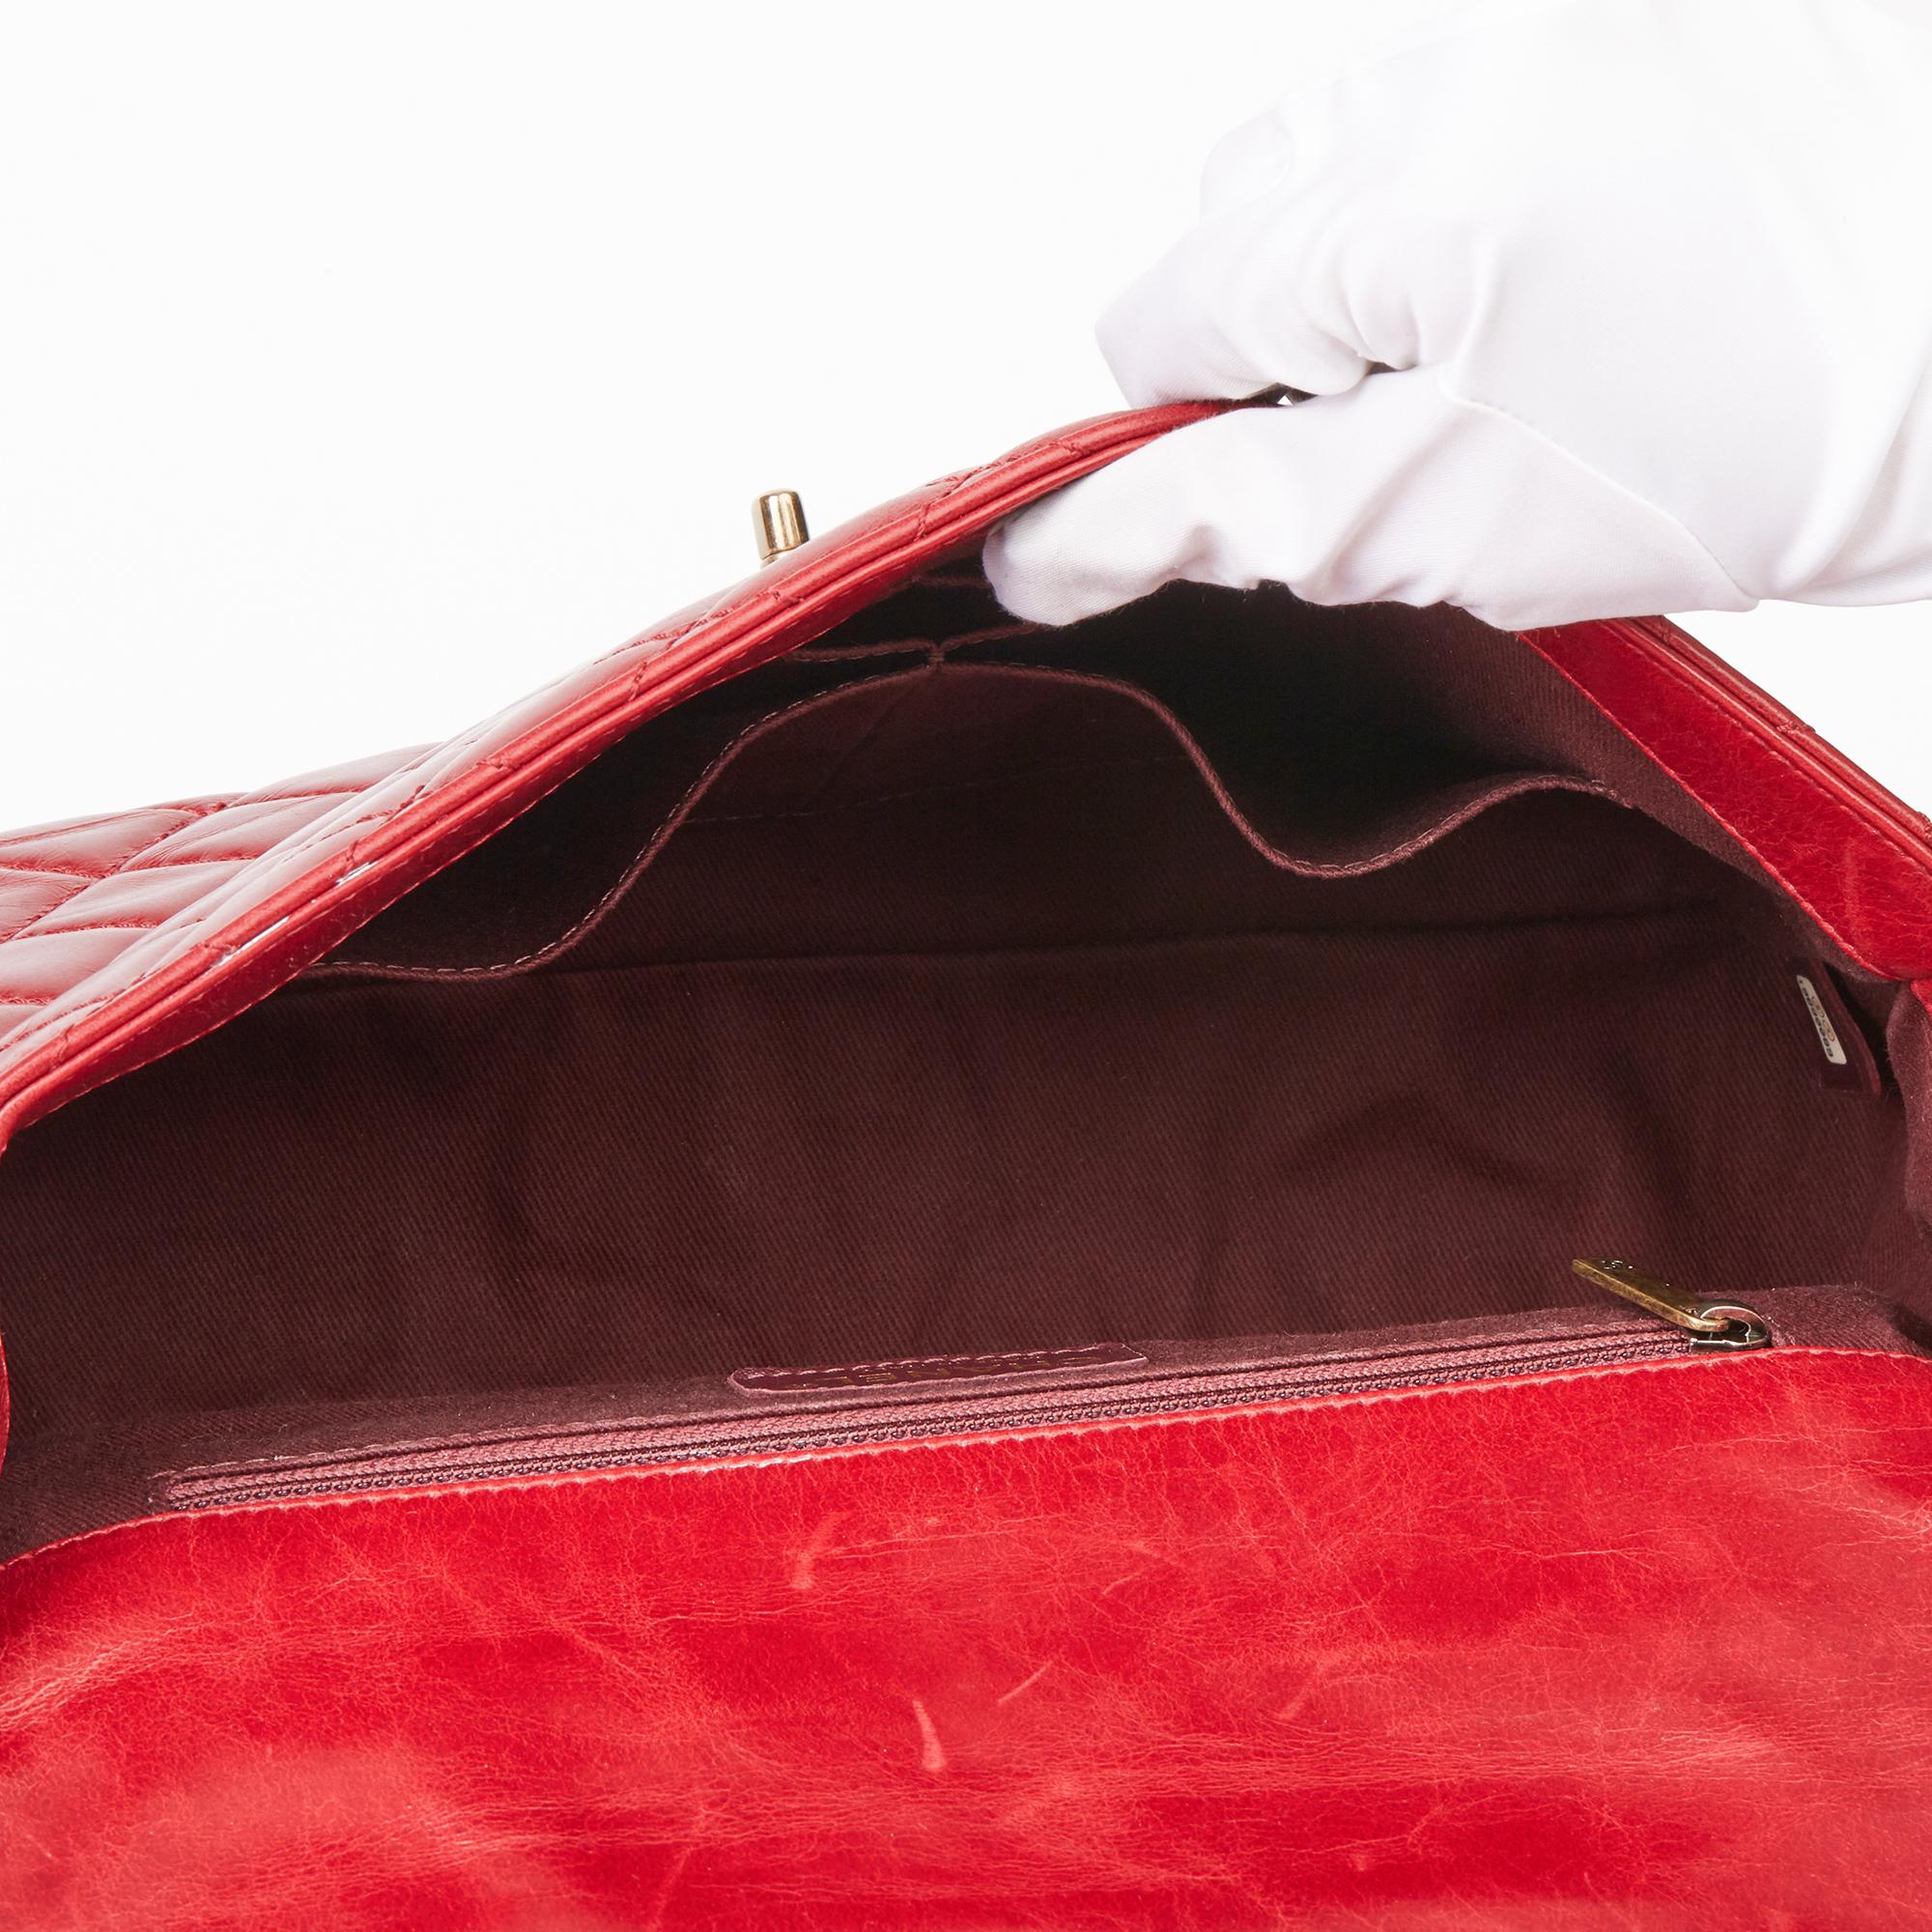 2014 Chanel Red Quilted Glazed Calfskin Leather Medium Castle Rock Flap Bag 3